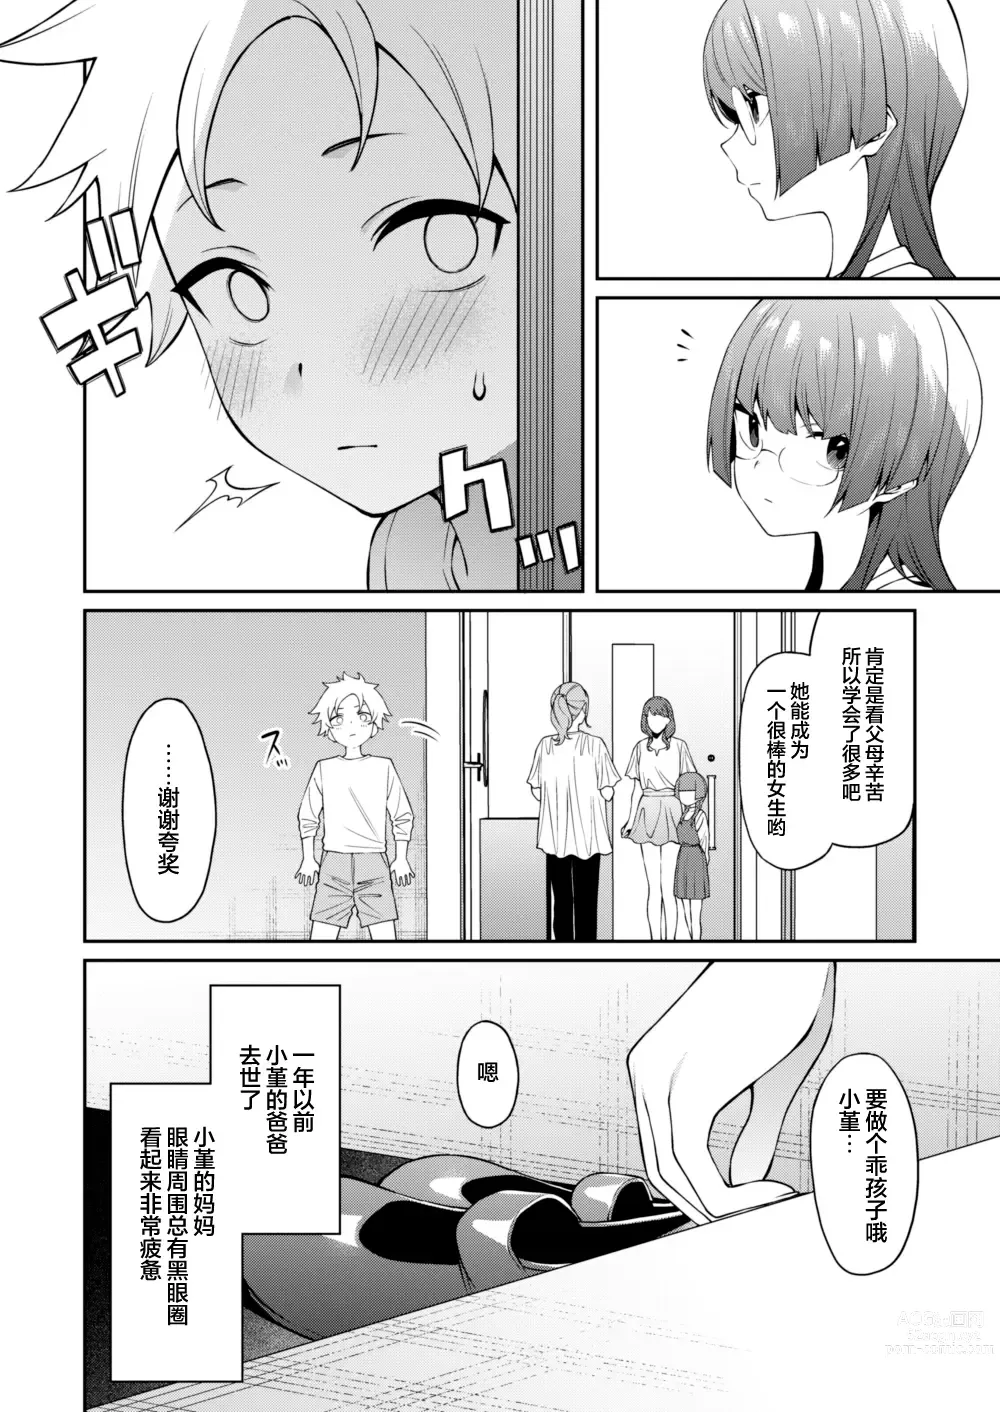 Page 11 of doujinshi Sumire-chan ha atama ga ii.